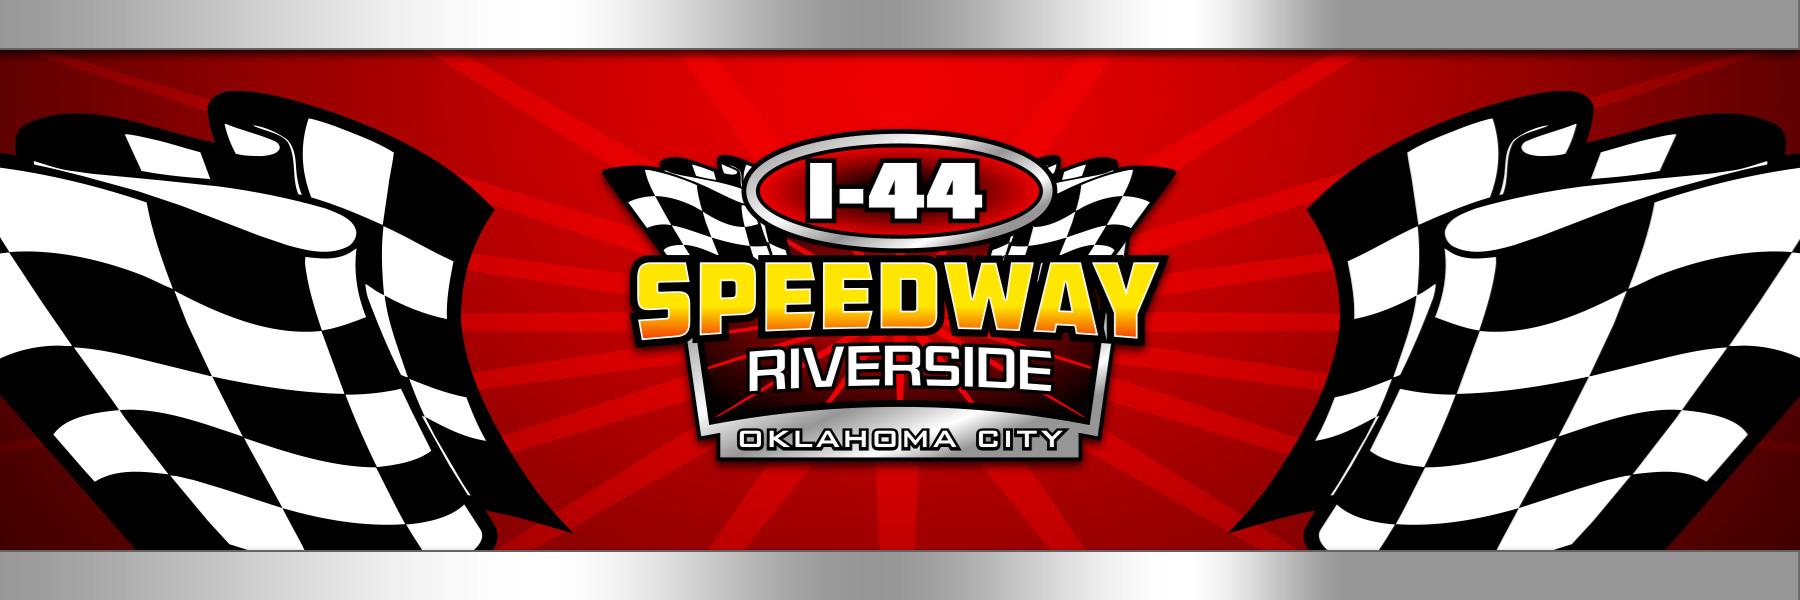 5/2/2020 - I-44 Riverside Speedway